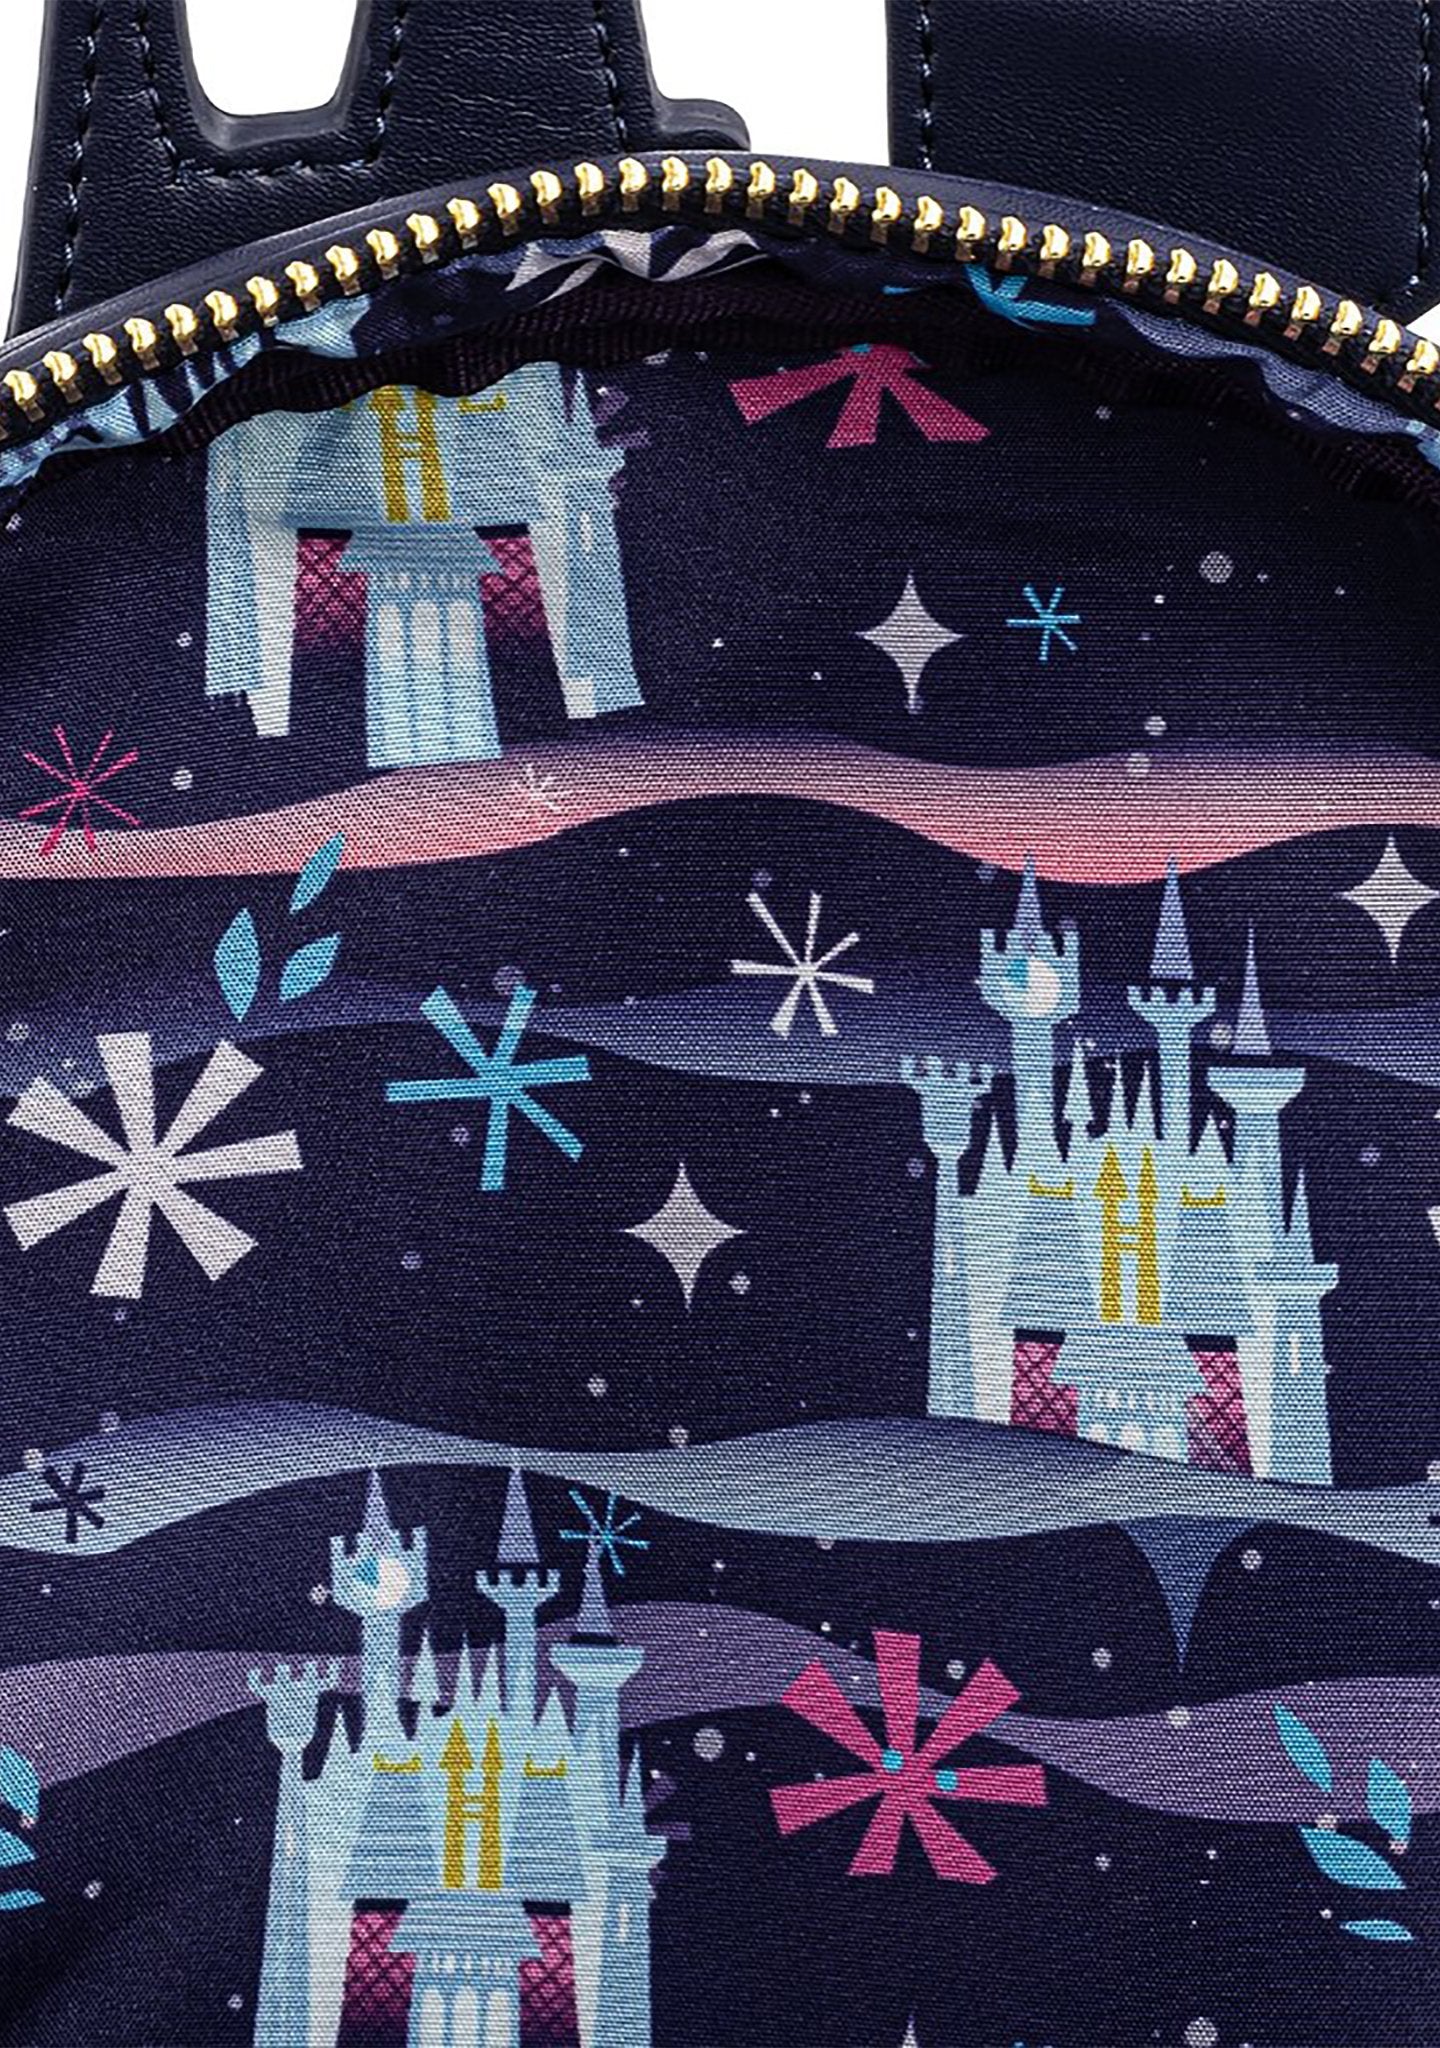 Disney Cinderella Castle Series Mini Backpack